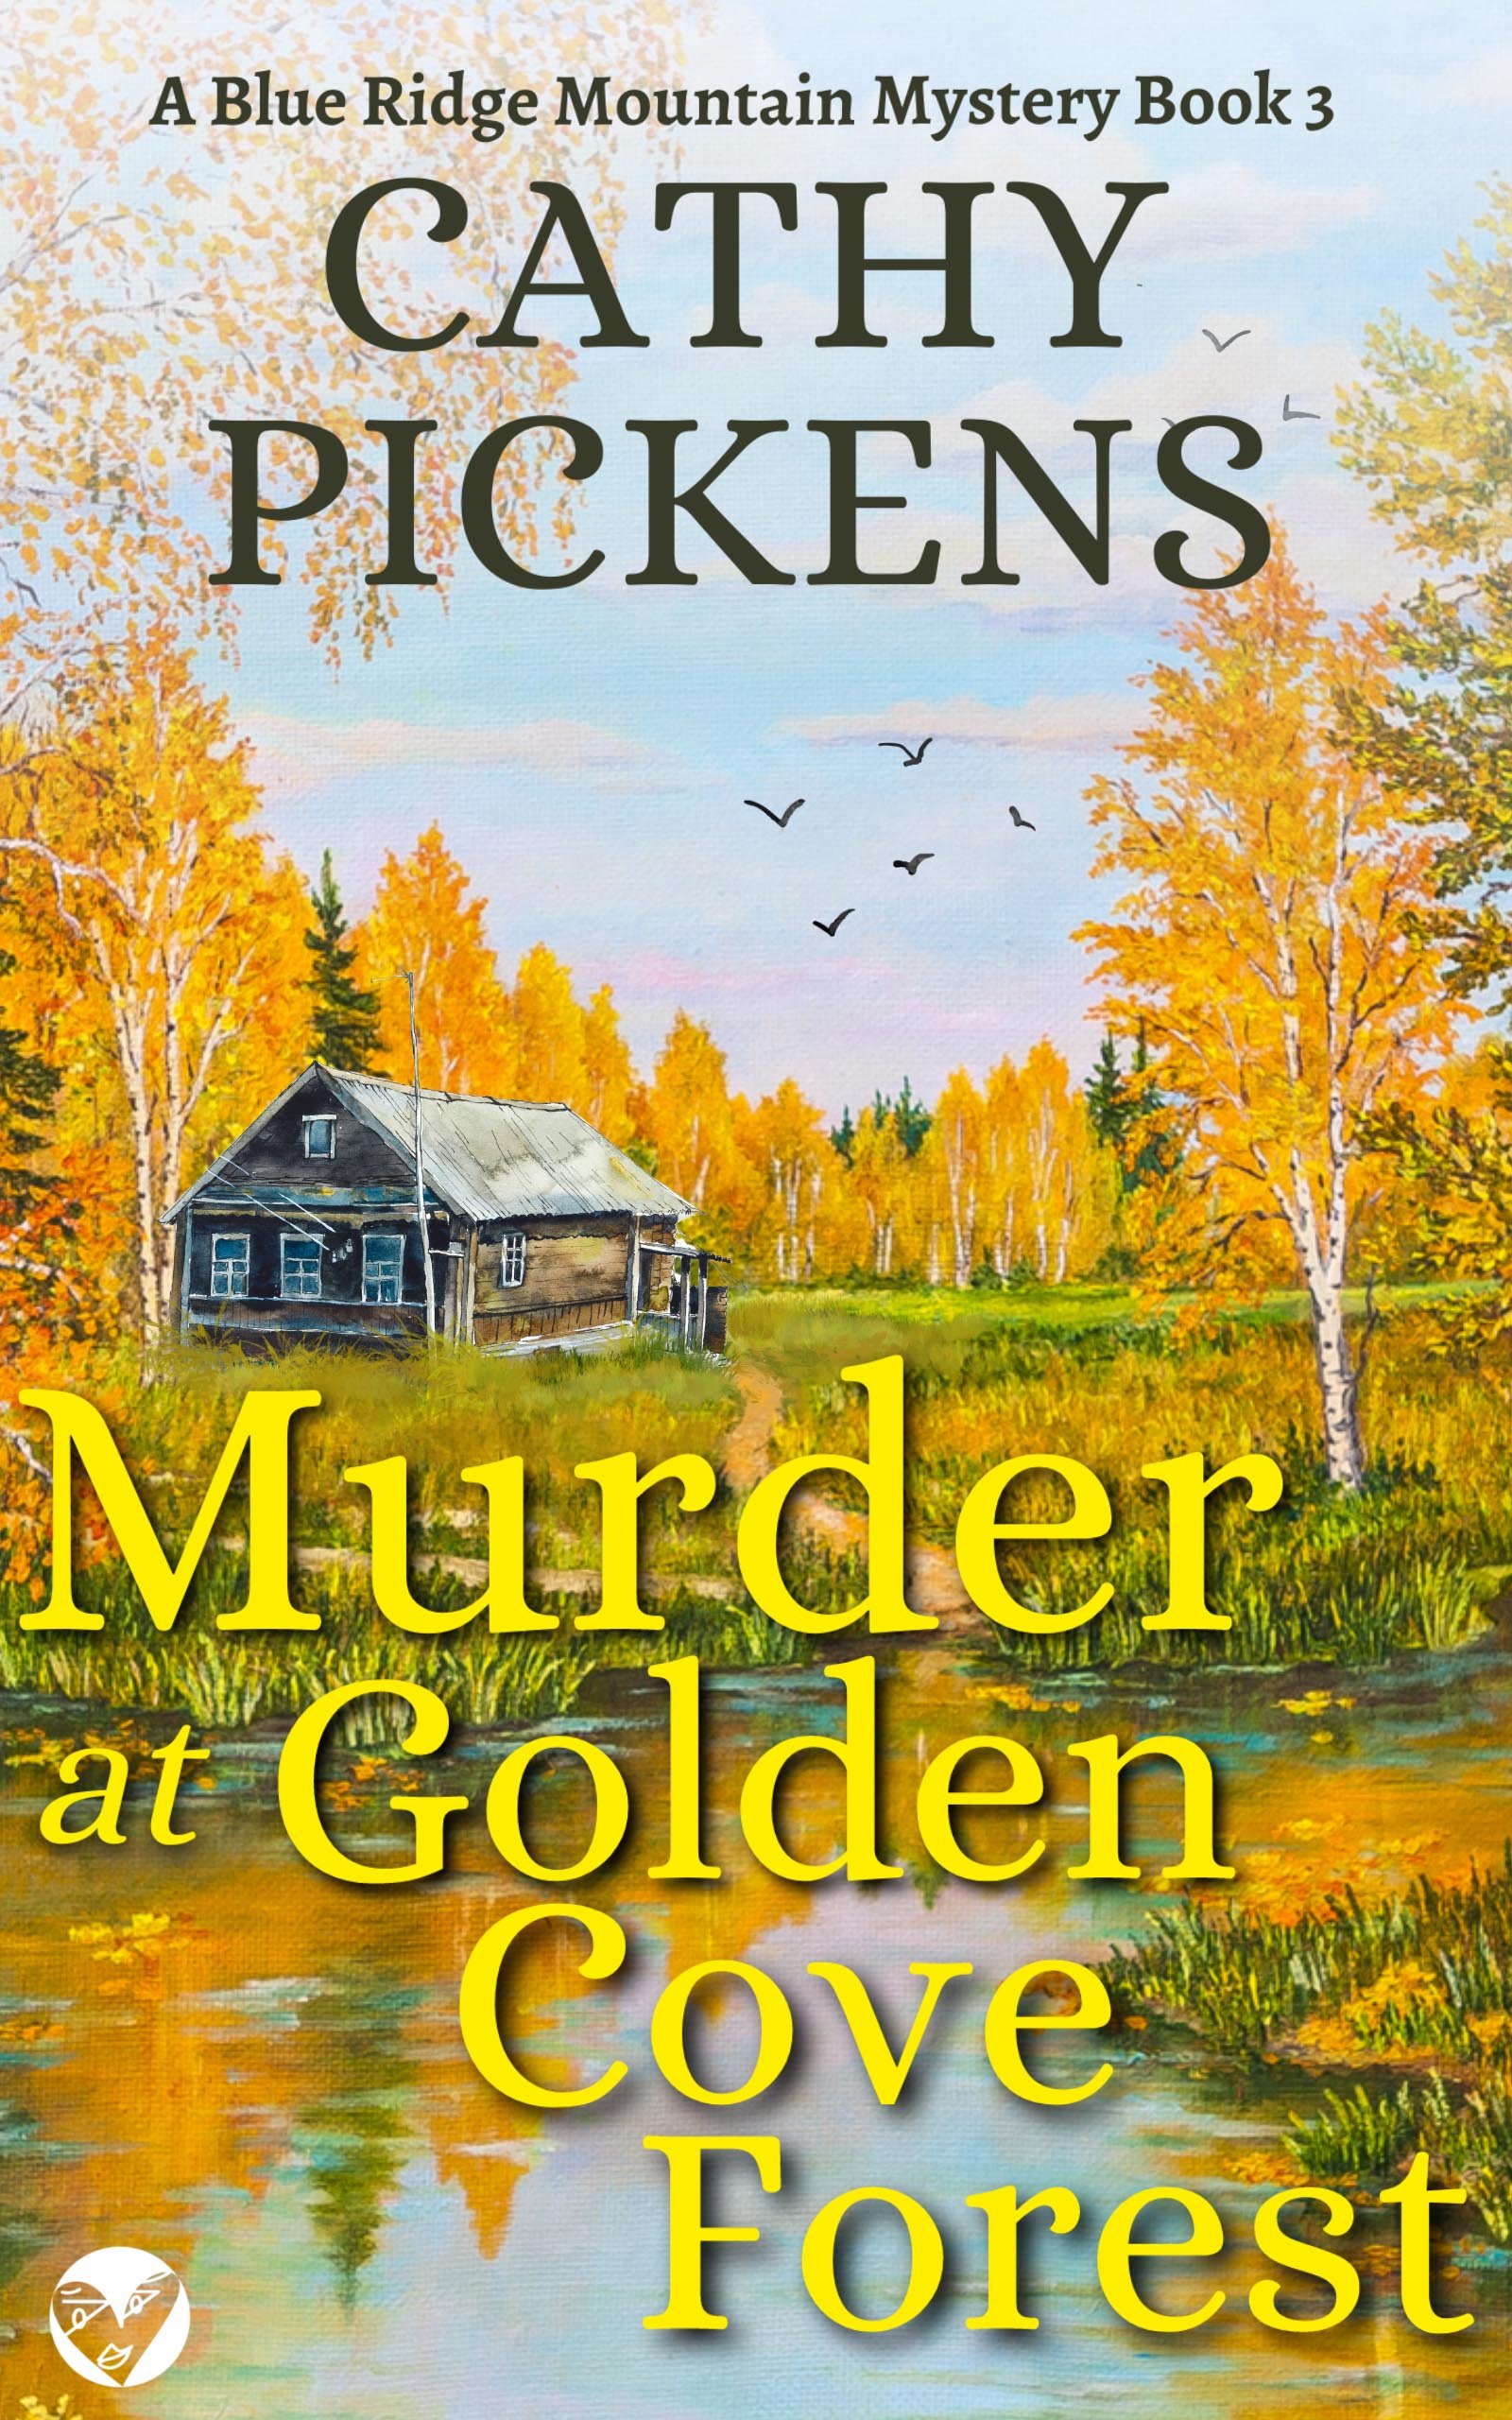 MURDER AT GOLDEN COVE FOREST cover 591k Publish.jpg